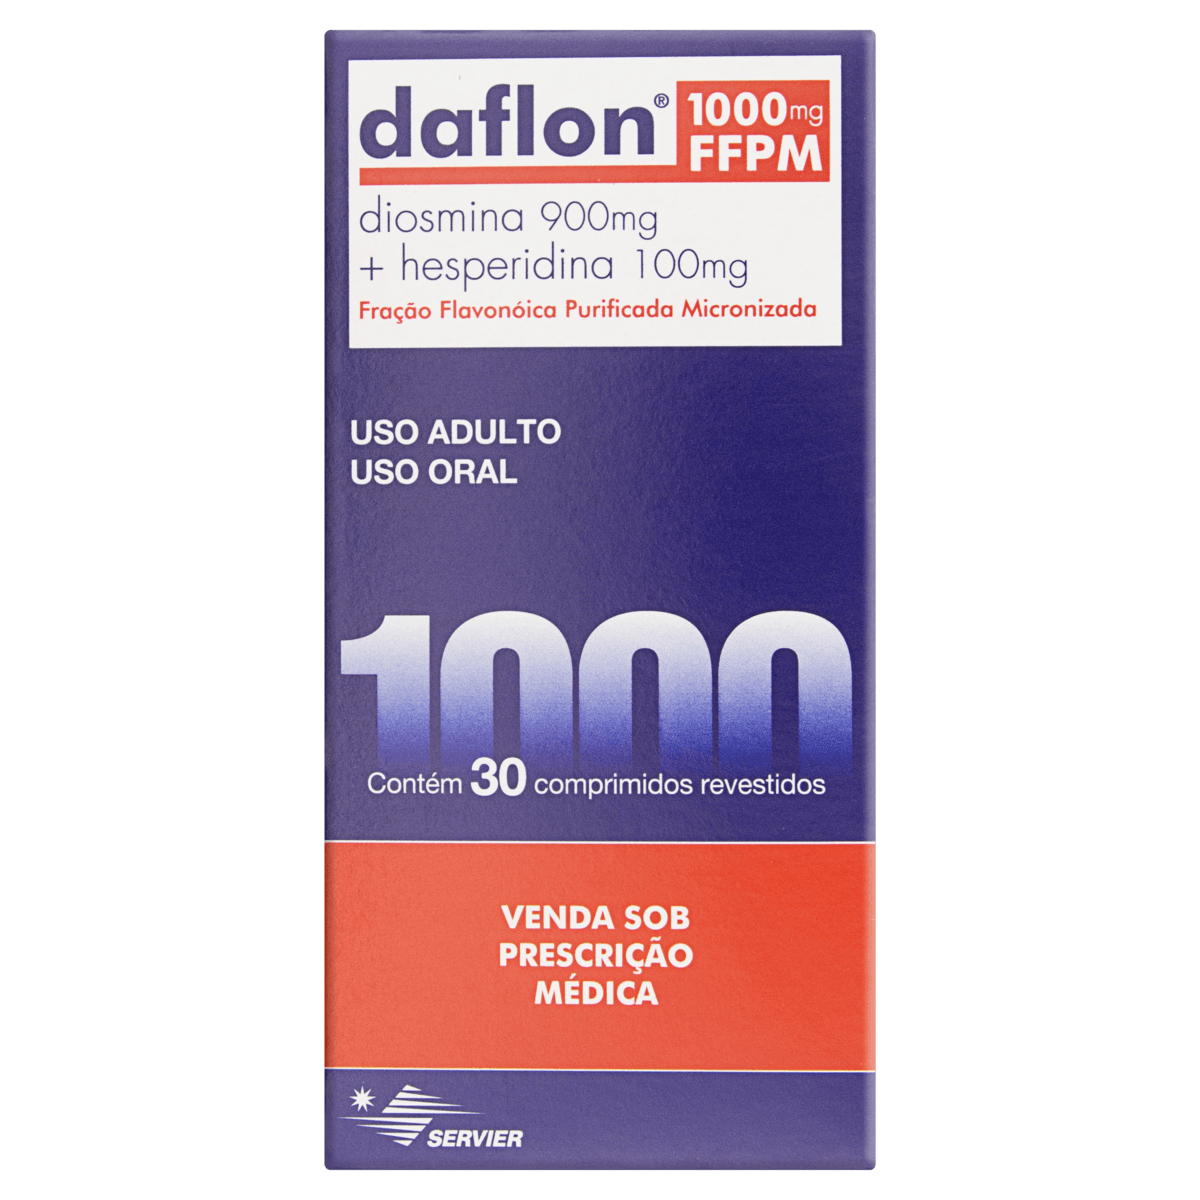 Daflon 1000mg Servier 30 comprimidos revestidos - Drogaria Sao Paulo